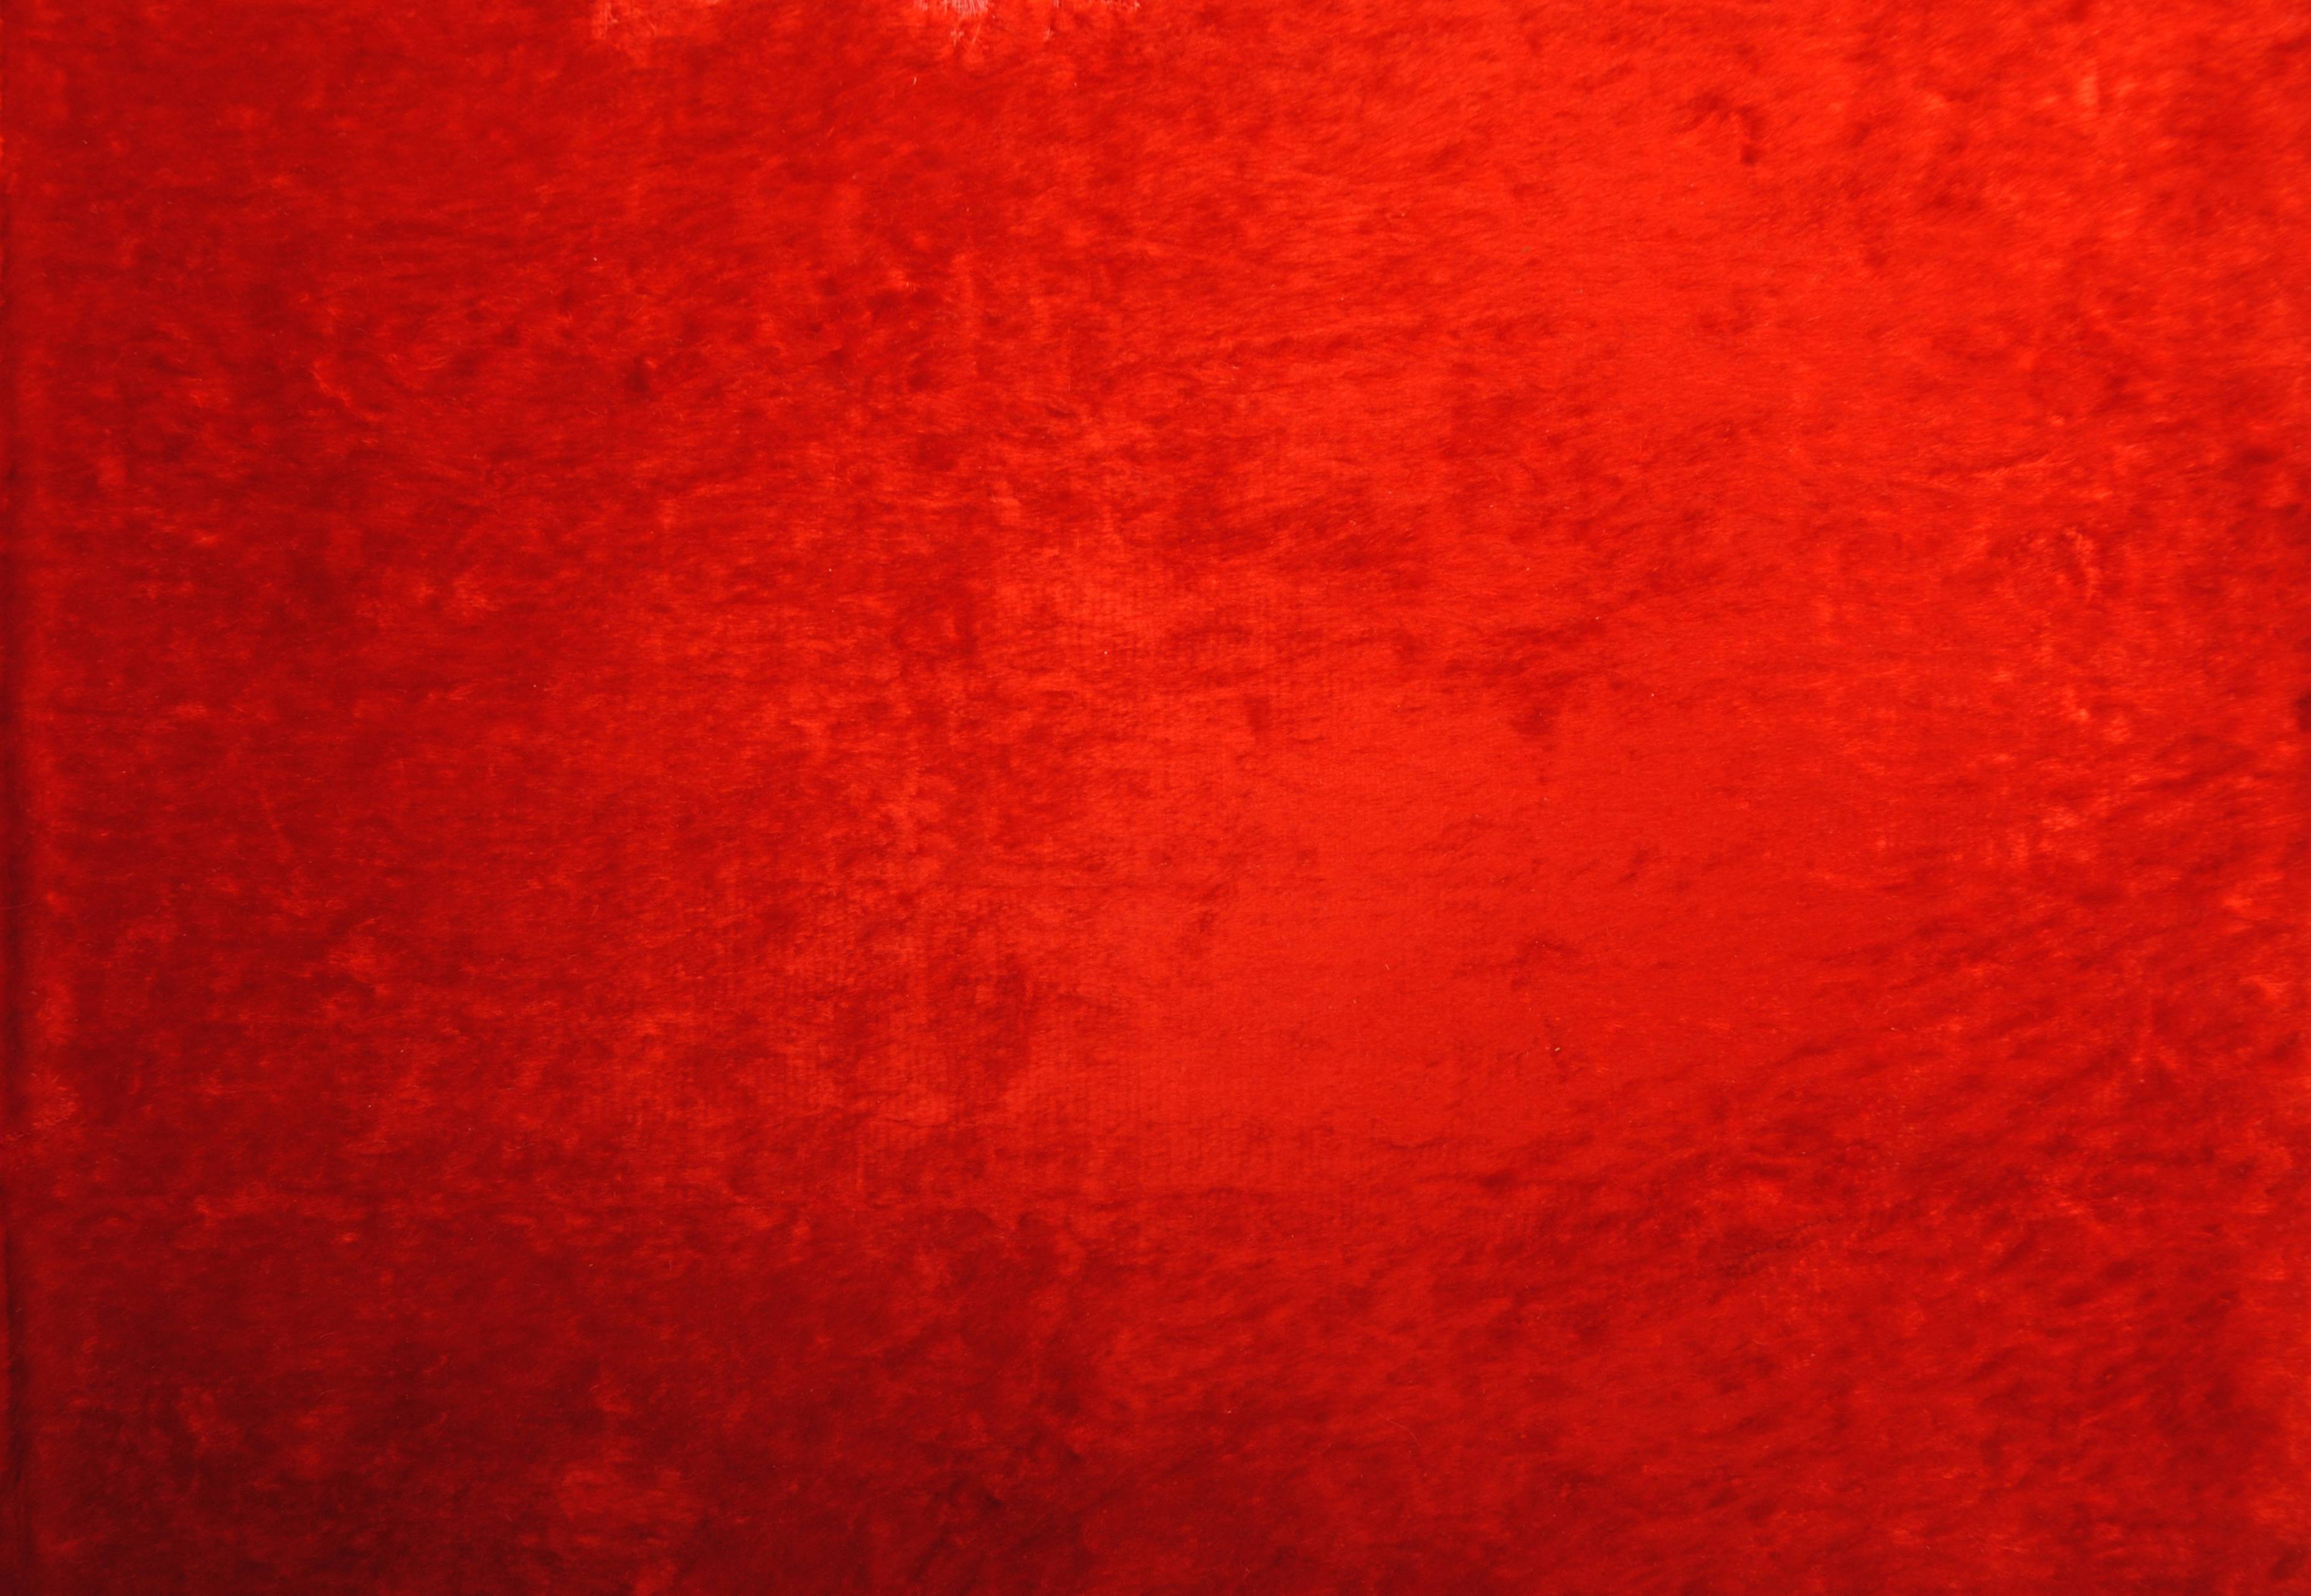 Download Texture Red Velvet Wallpaper 3712x2564. Full HD Wallpaper